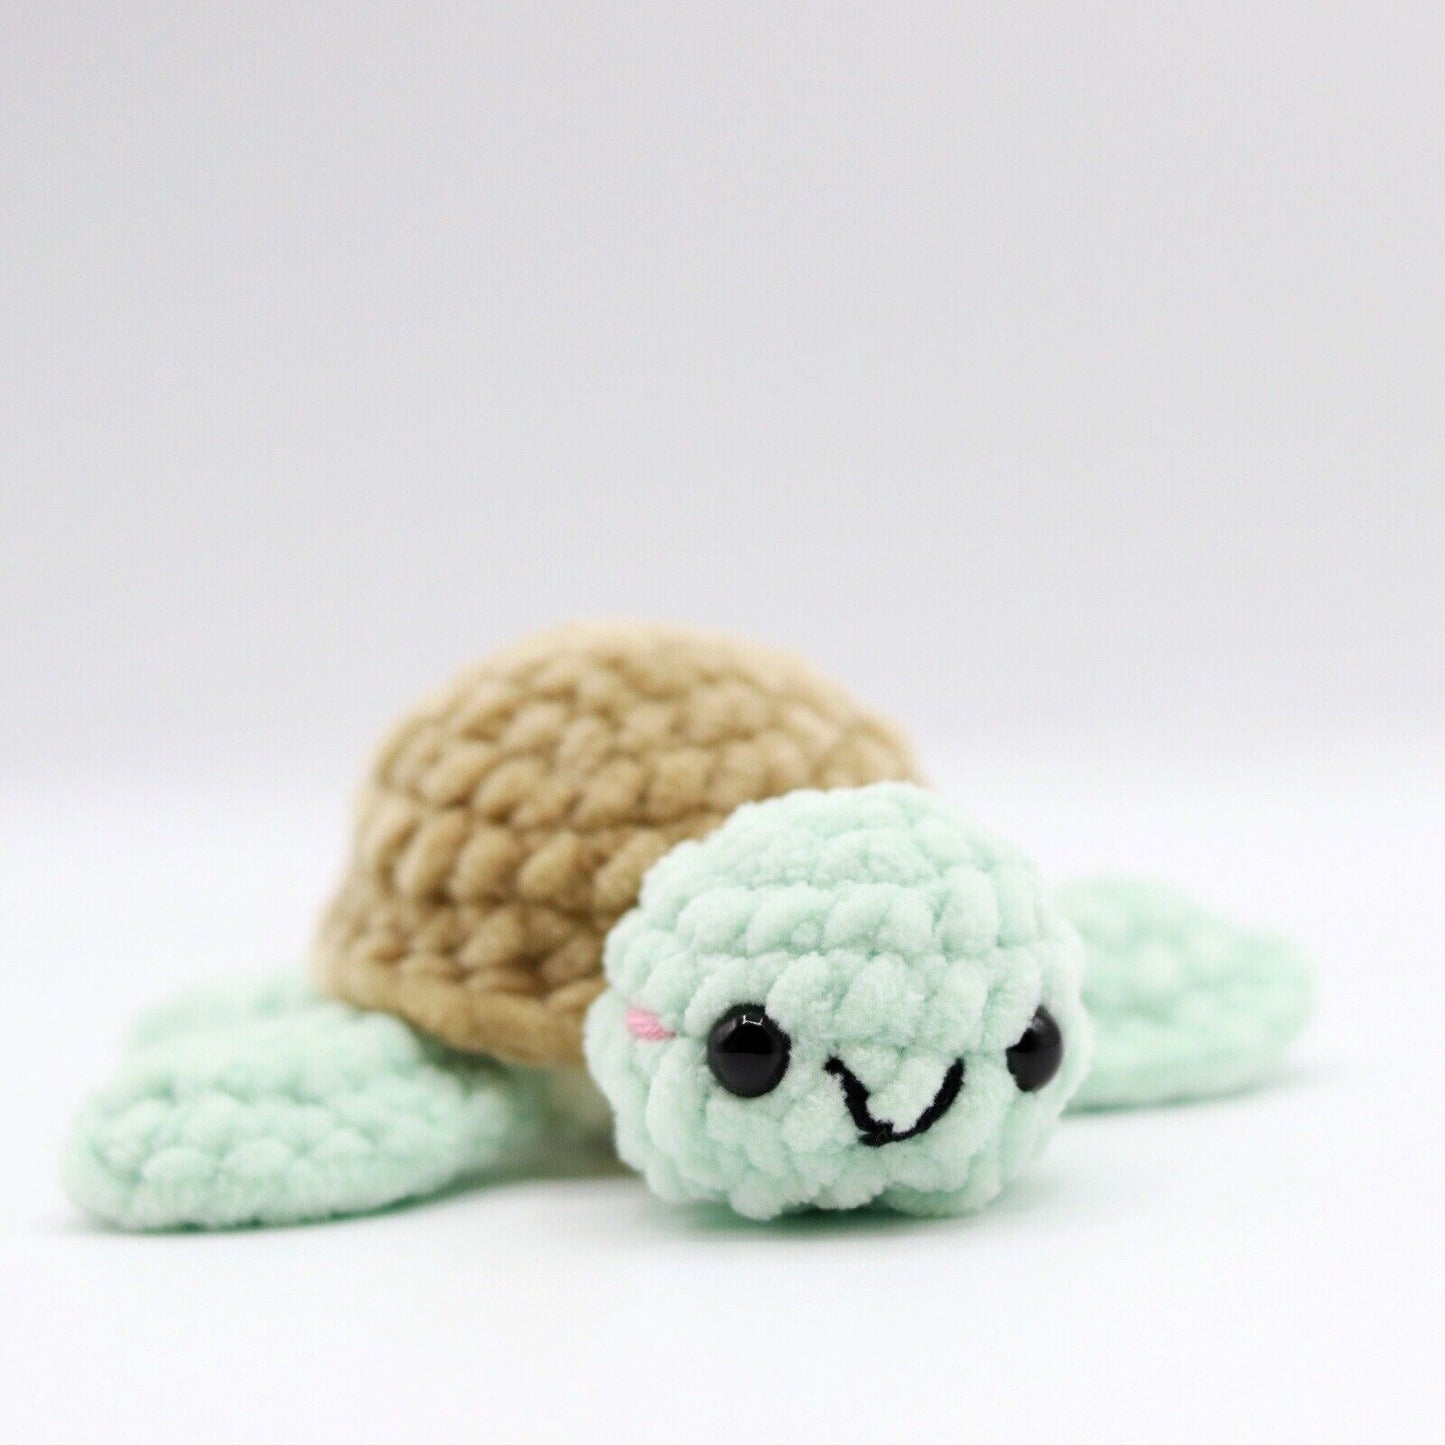 Handmade crochet plush turtle toy